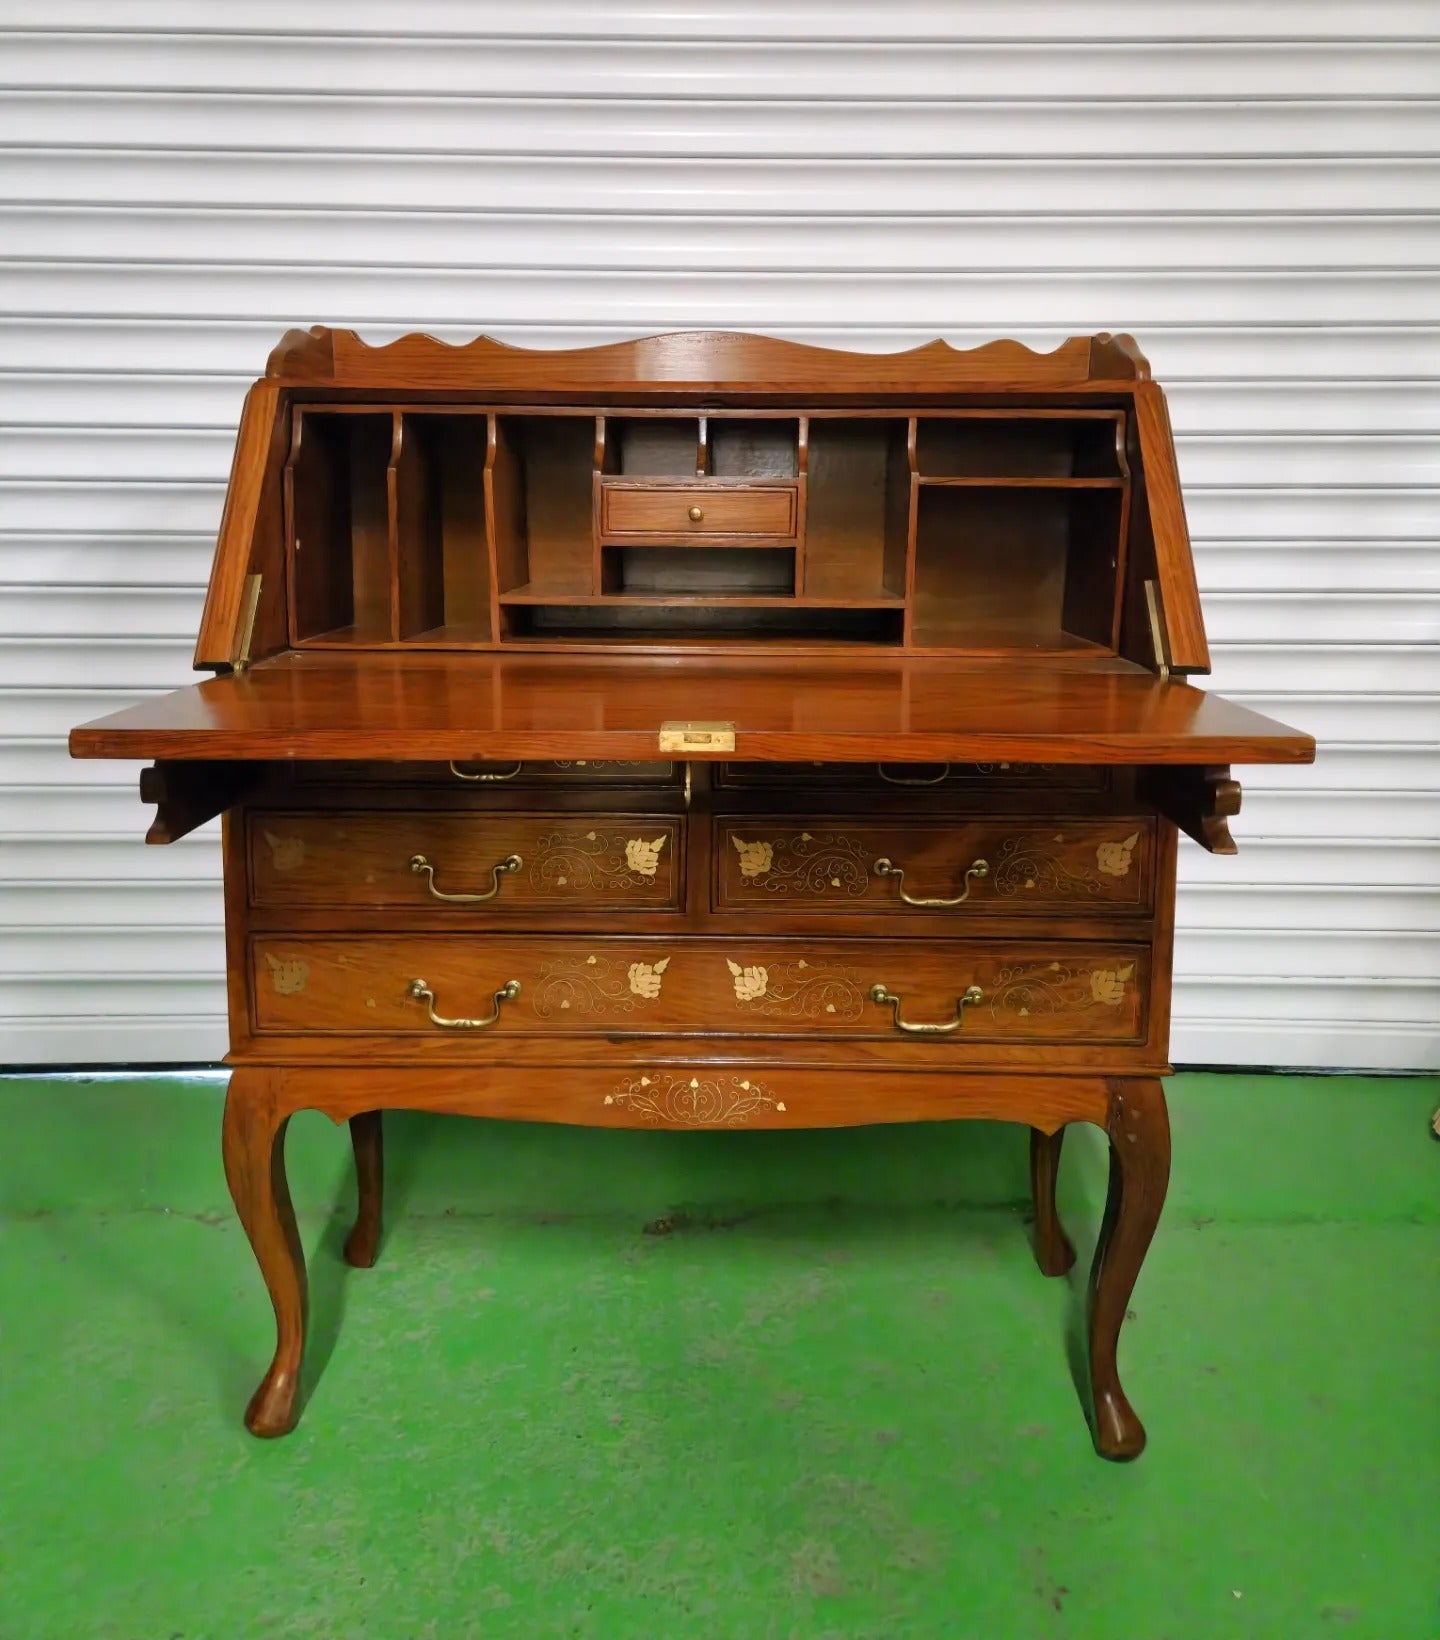 Antique rosewood mahogany 5 drawer writing bureau, inlaid design, with upstand, slim design Q4323